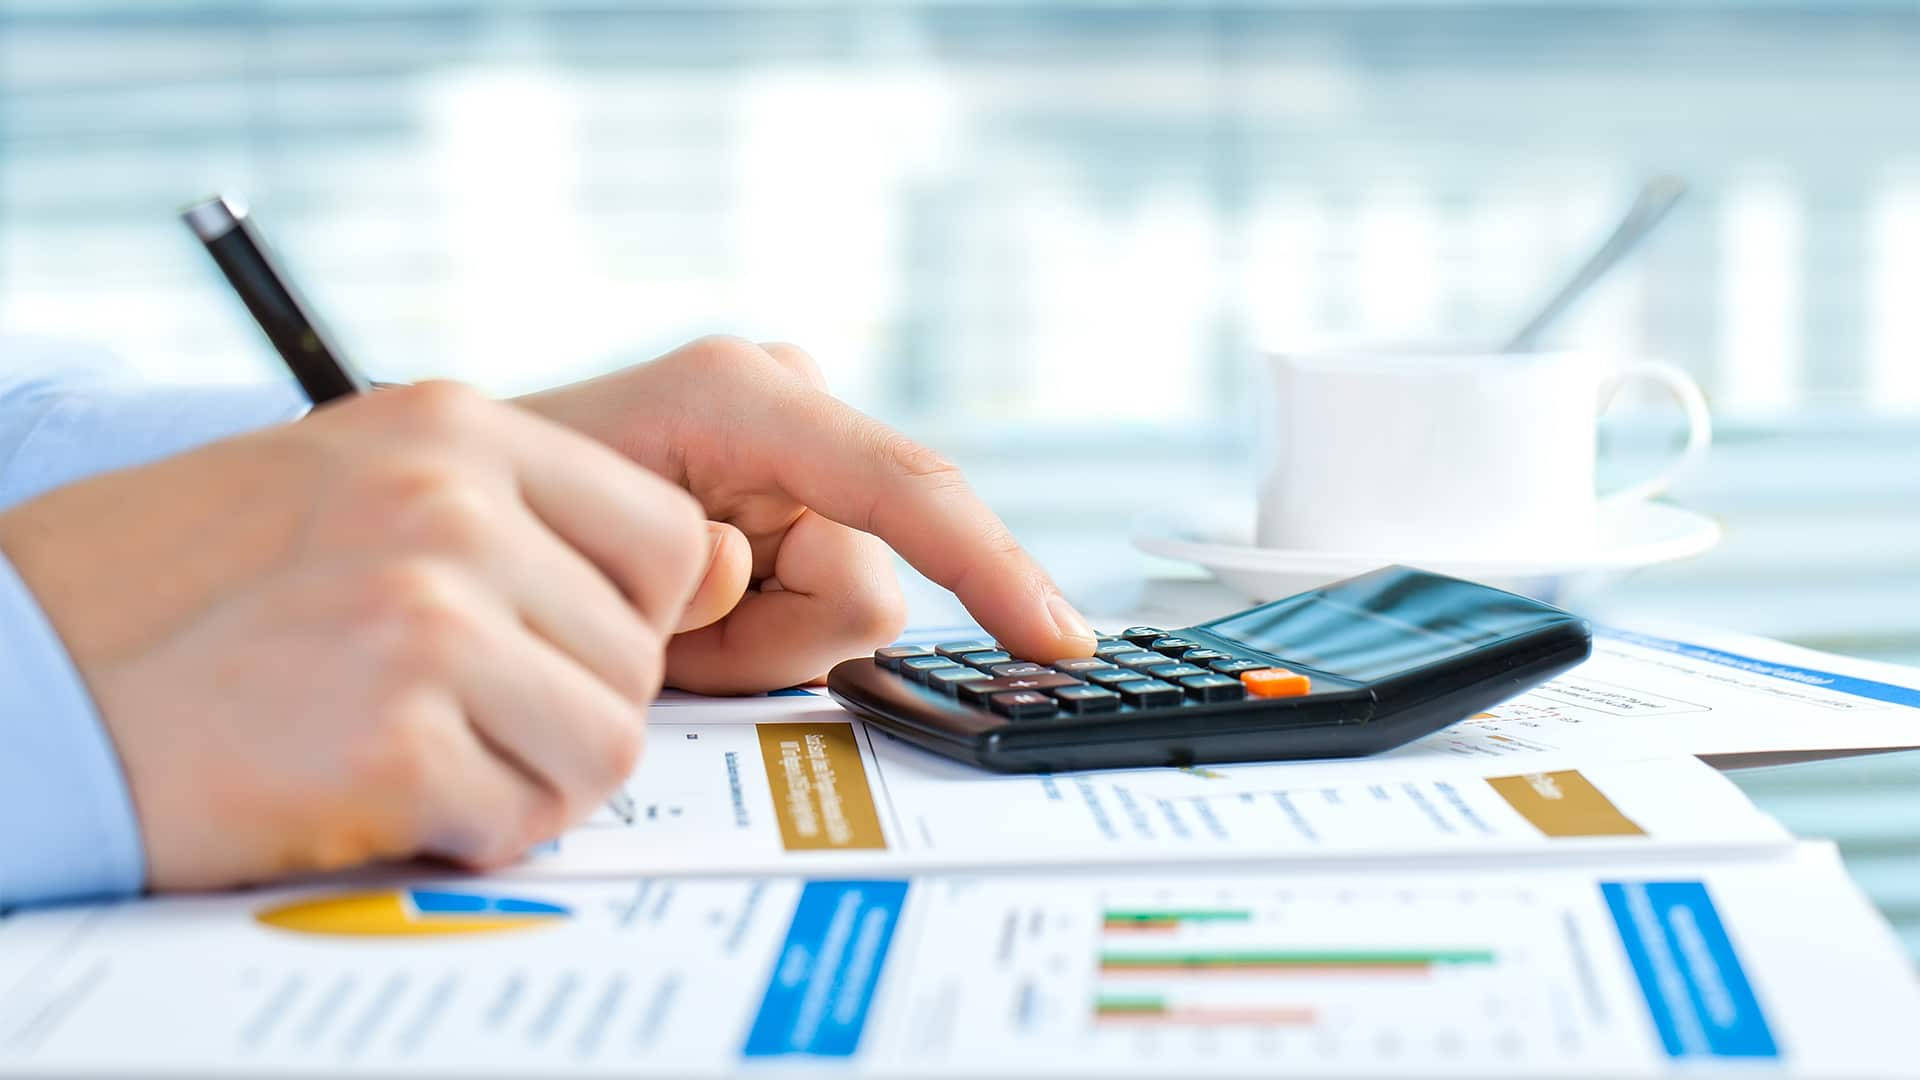 Accounting Charts And Calculator